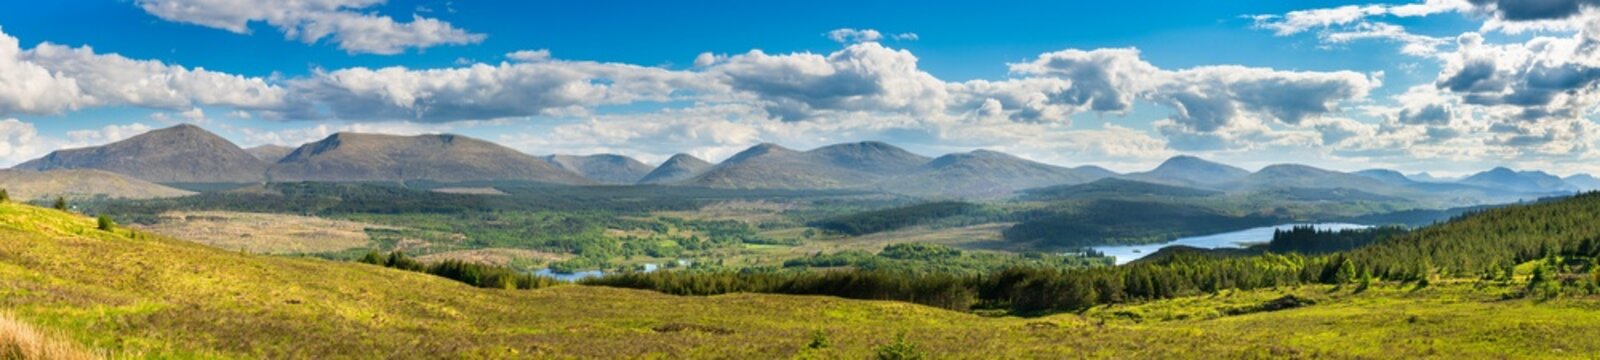 Glen Garry viewpoint panorama in Scotland